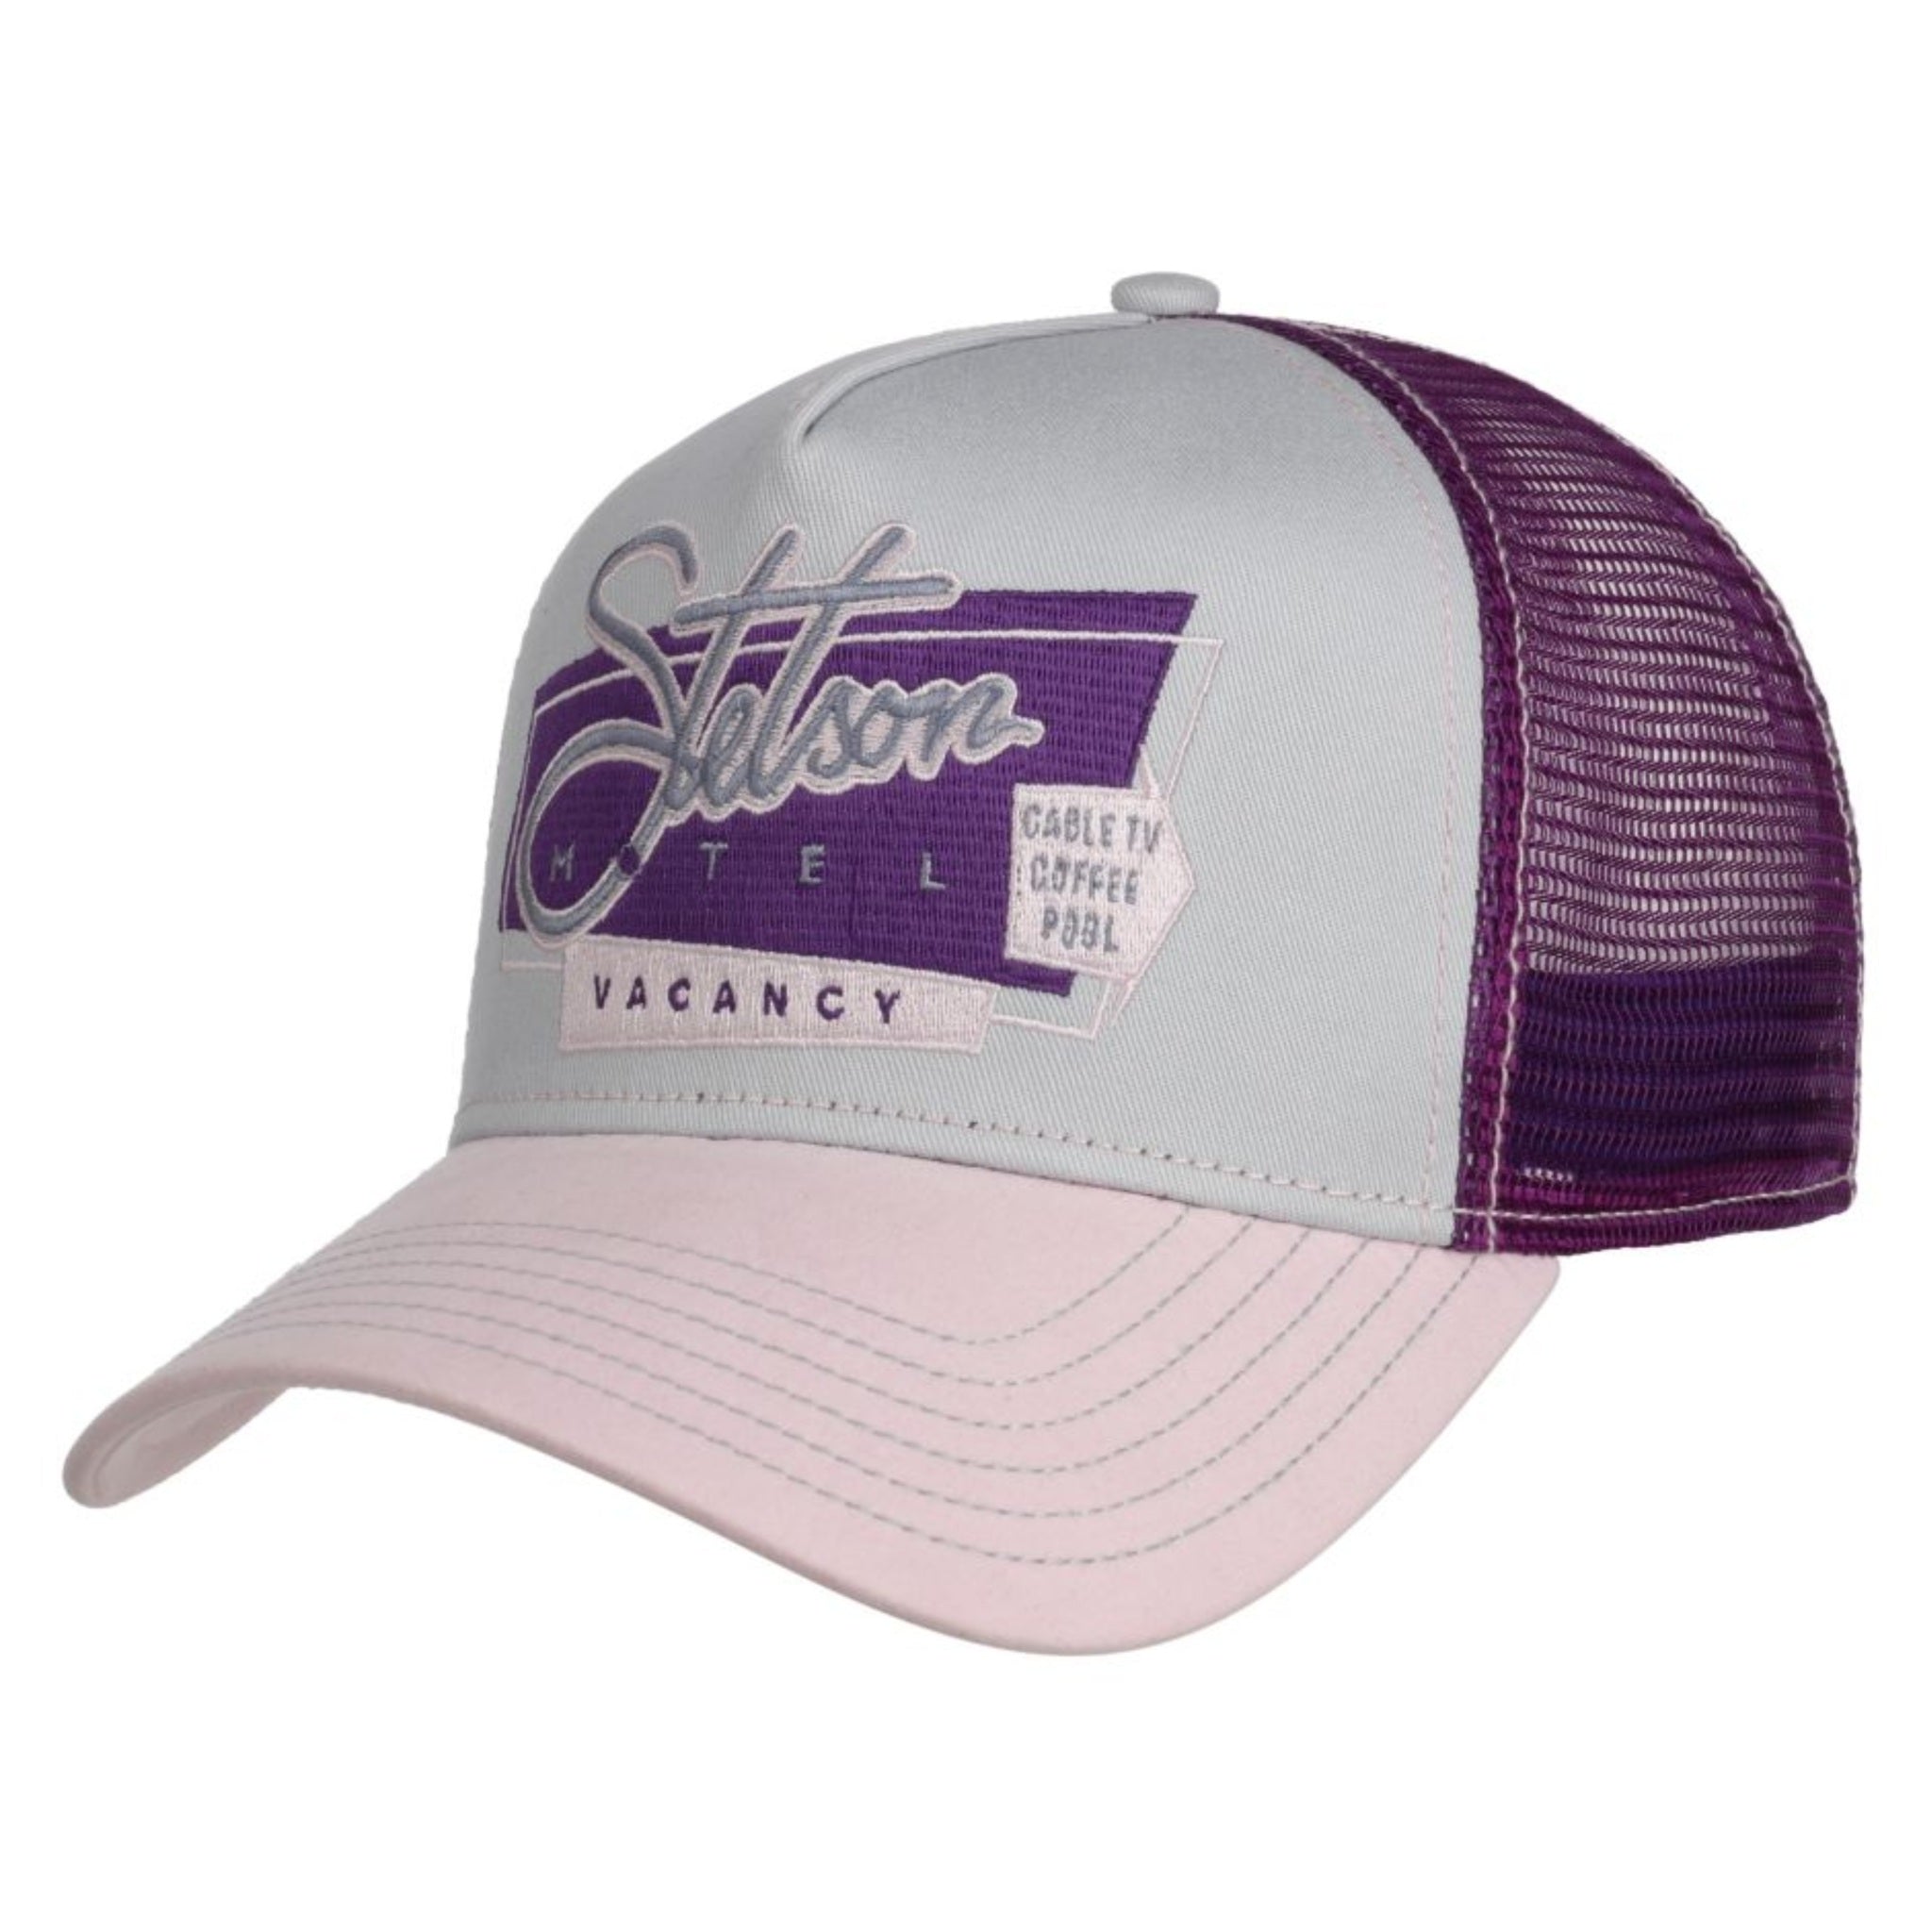 The Hat Shop Stetson Trucker Cap Purple